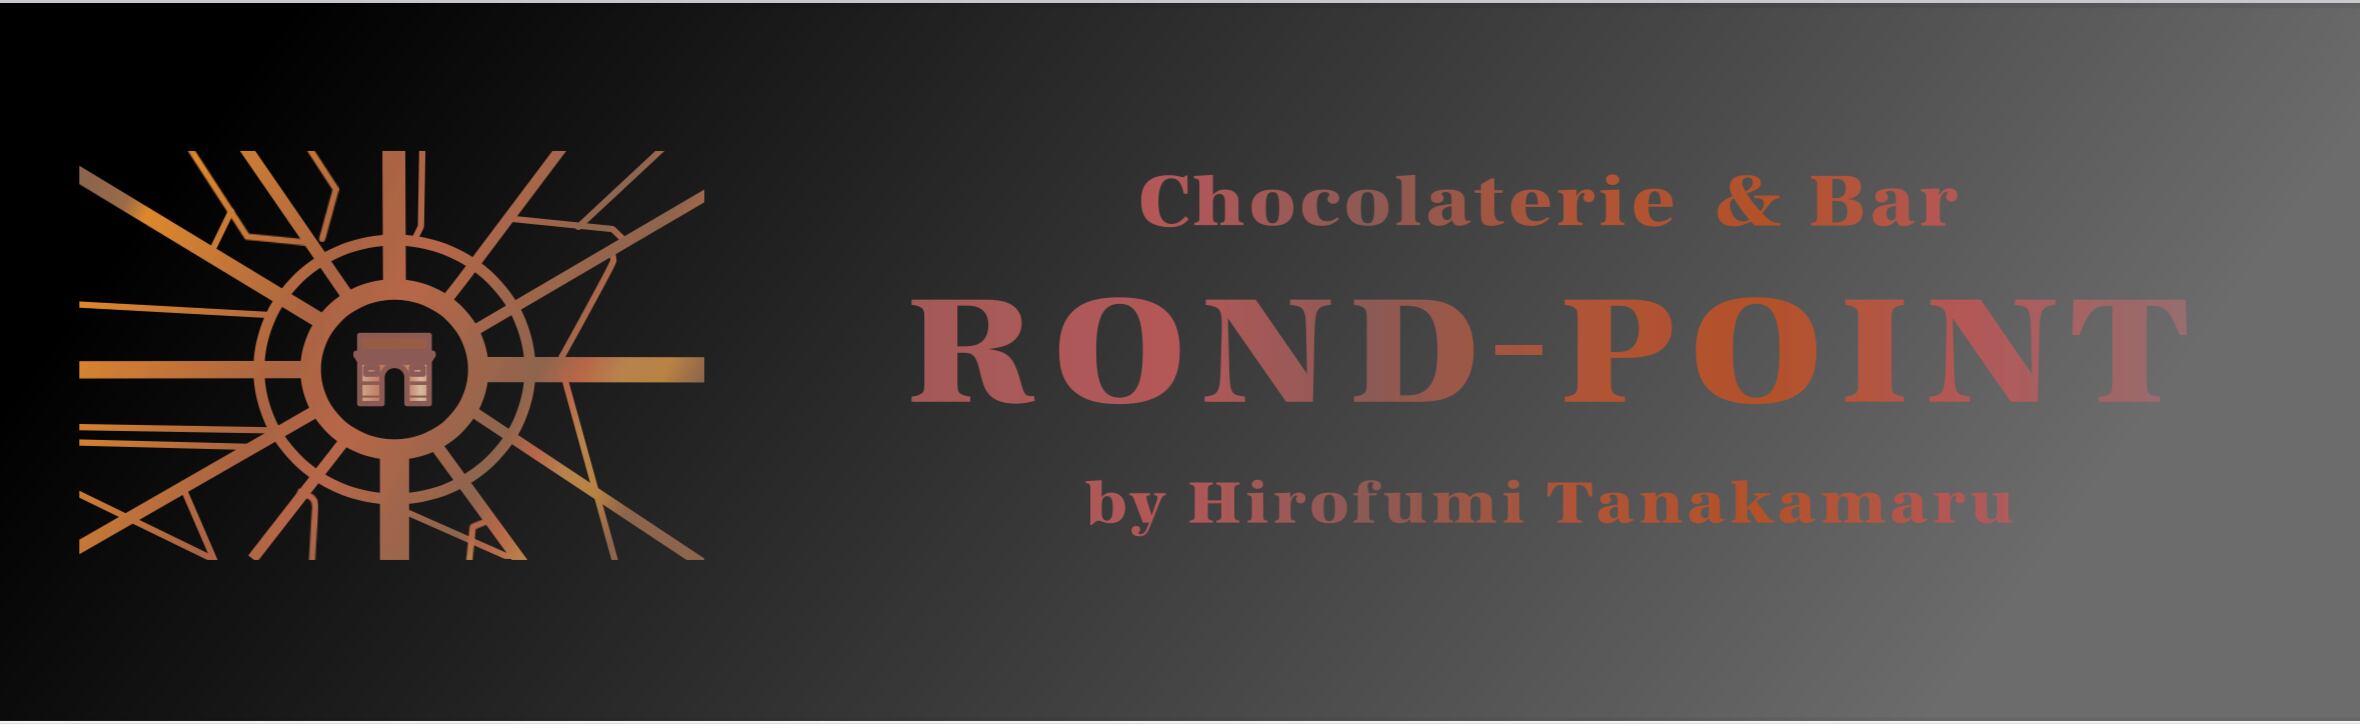 Chocolaterie ROND-POINT by Hirofumi Tanakamaru